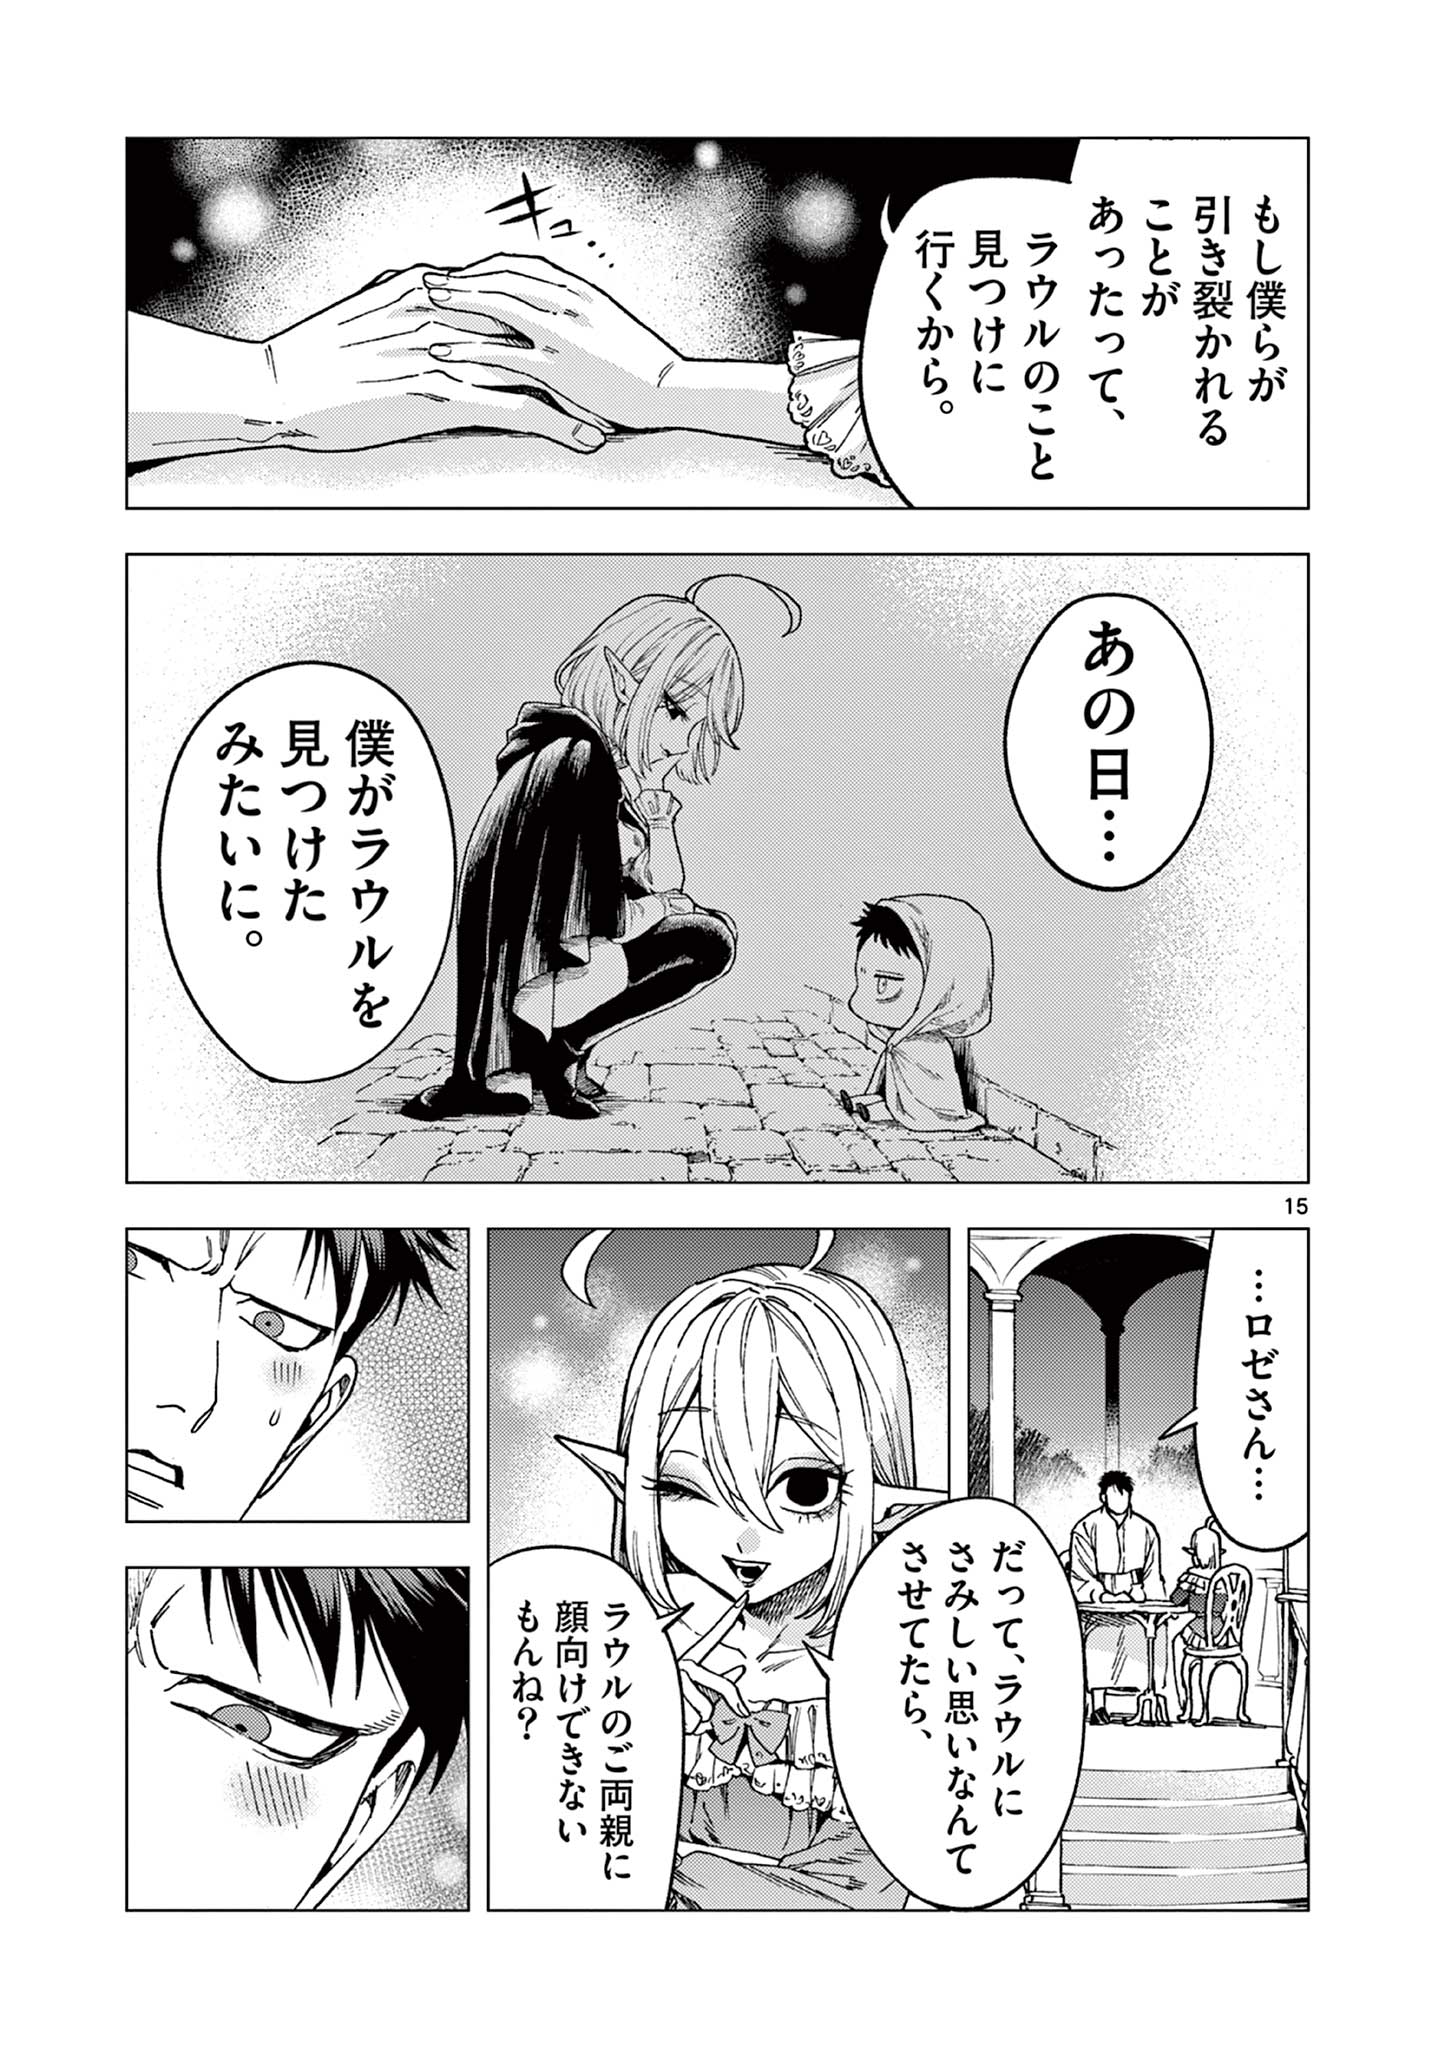 Raul to Kyuuketsuki - Chapter 5 - Page 15